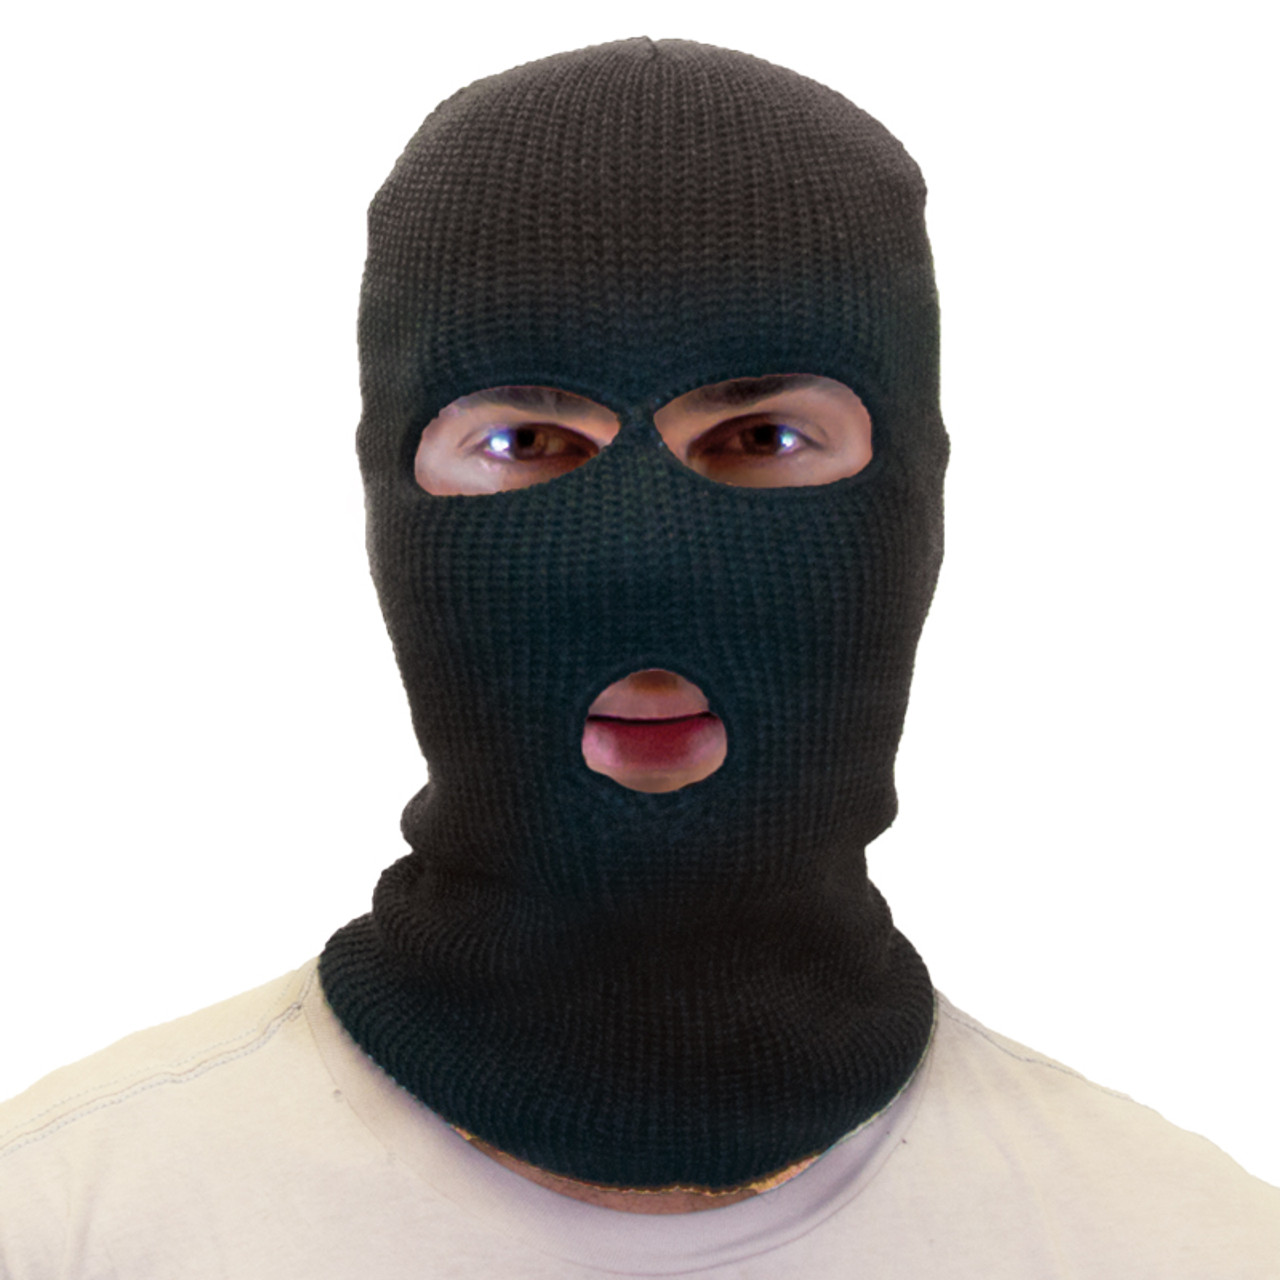 3051 Thief Robber Mask 1  29810.1603205165 ?c=2